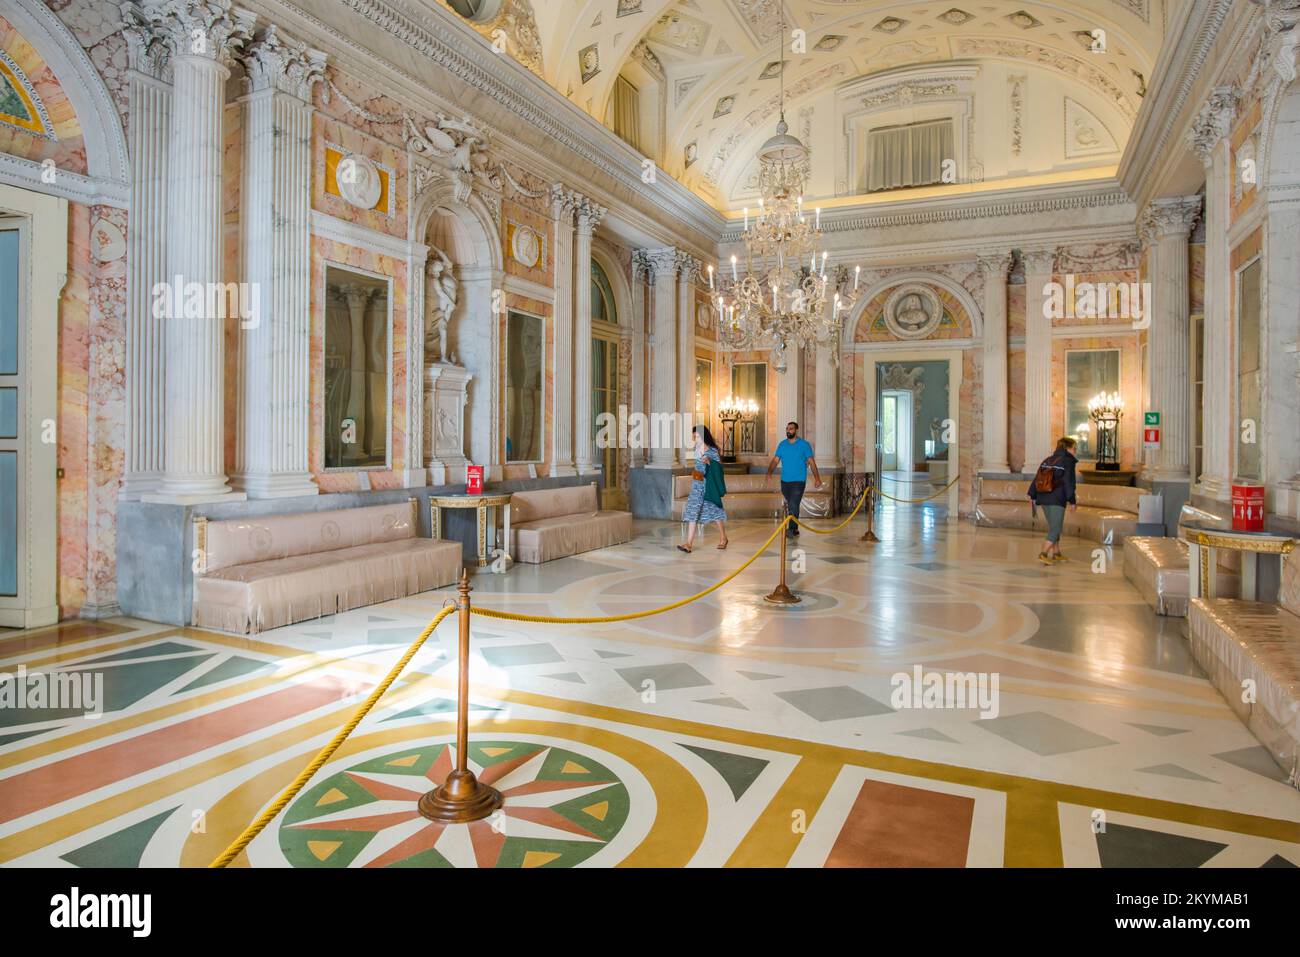 Palazzo Borromeo, view of the ornately decorated ballroom inside the Palazzo Borromeo, Isola Bella, Lake Maggiore, Italy Stock Photo